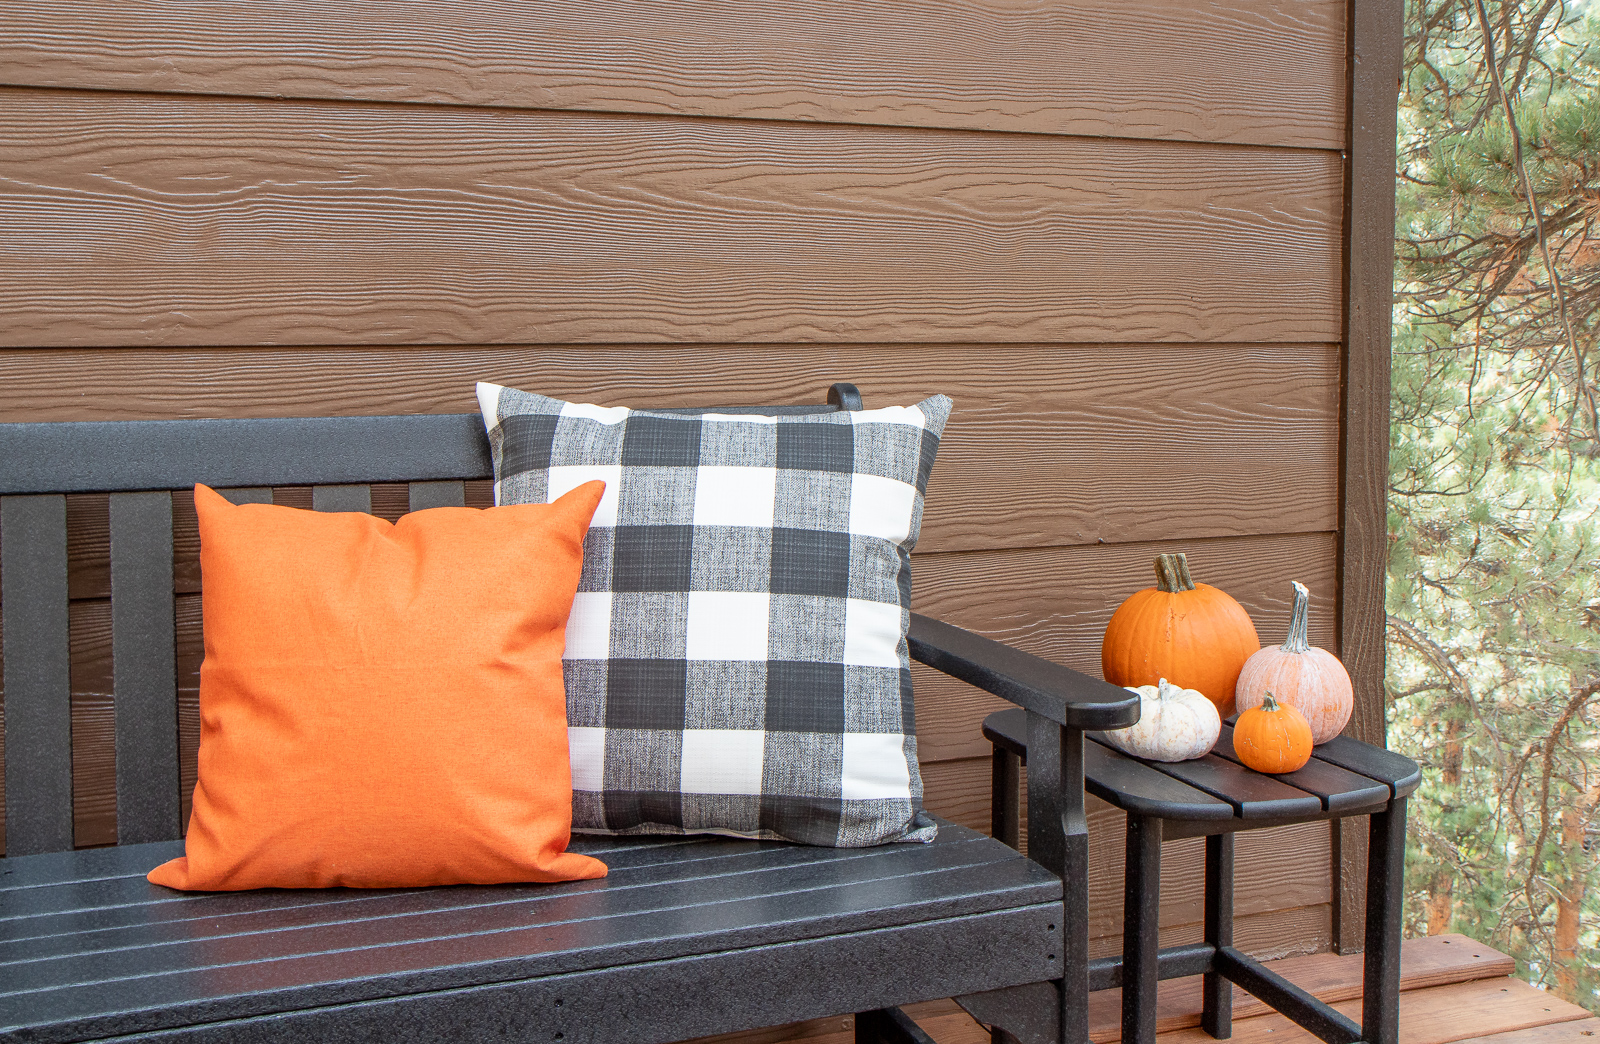 Outdoor orange and buffalo plaid pillows